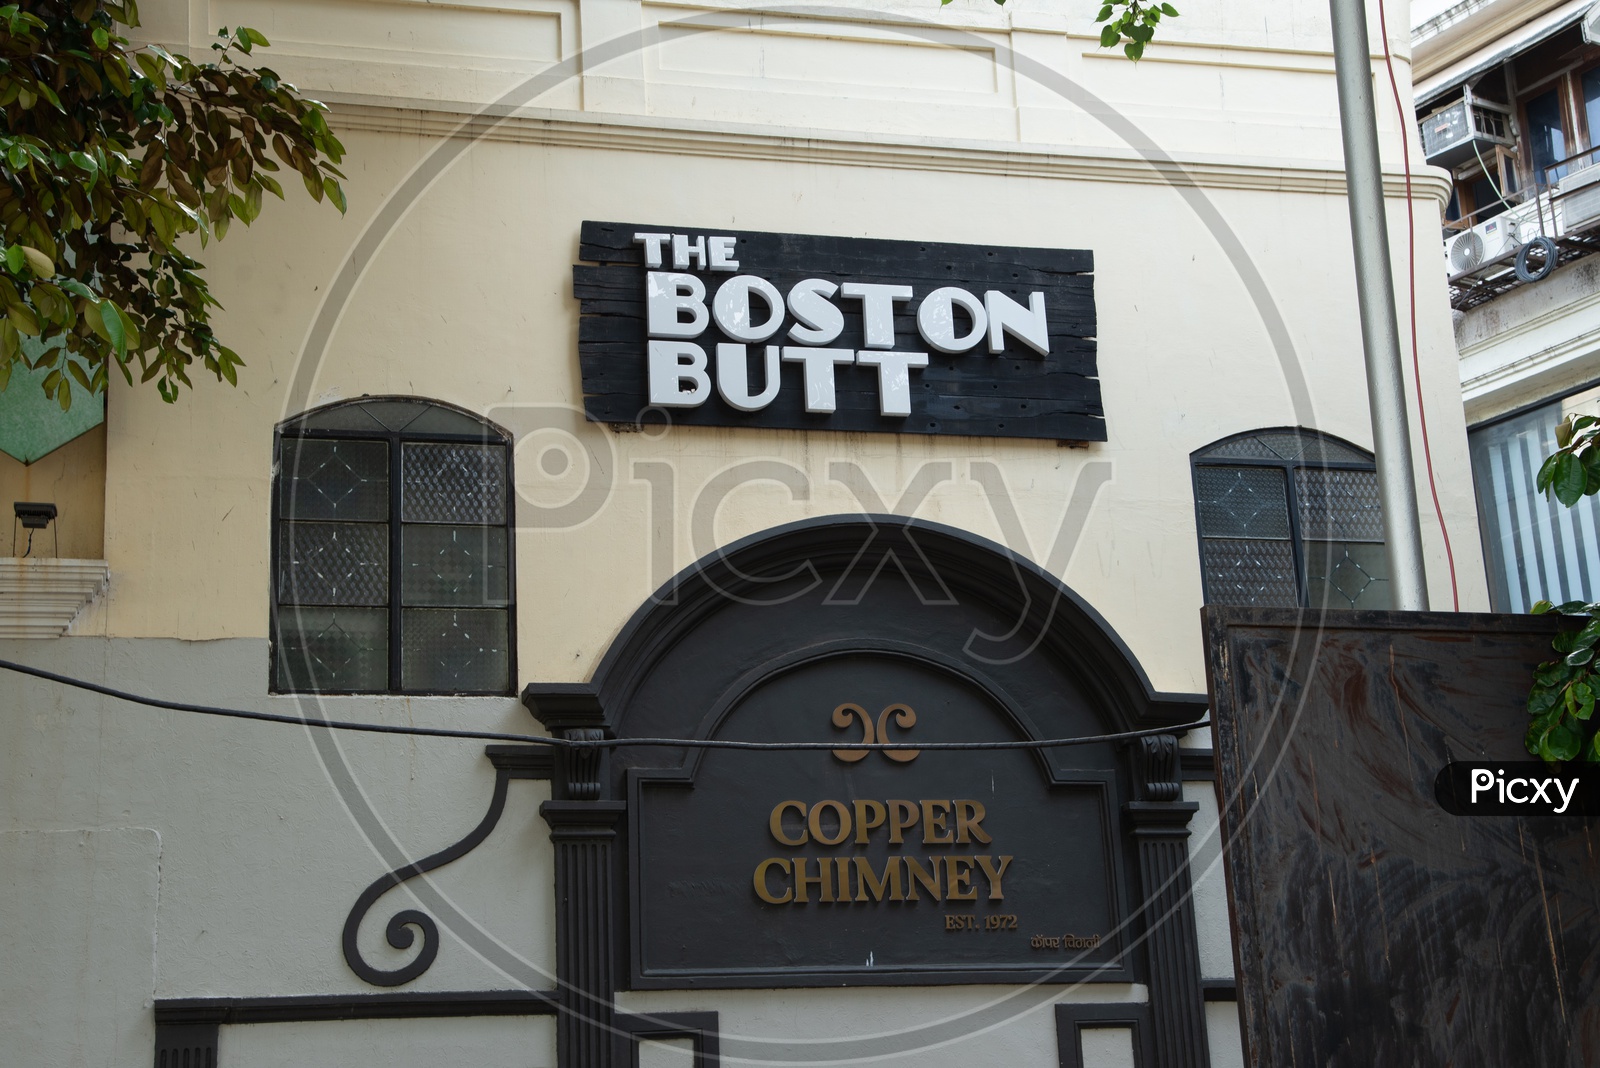 Boston Butt & Copper Chimney Restaurant in Fort, Mumbai